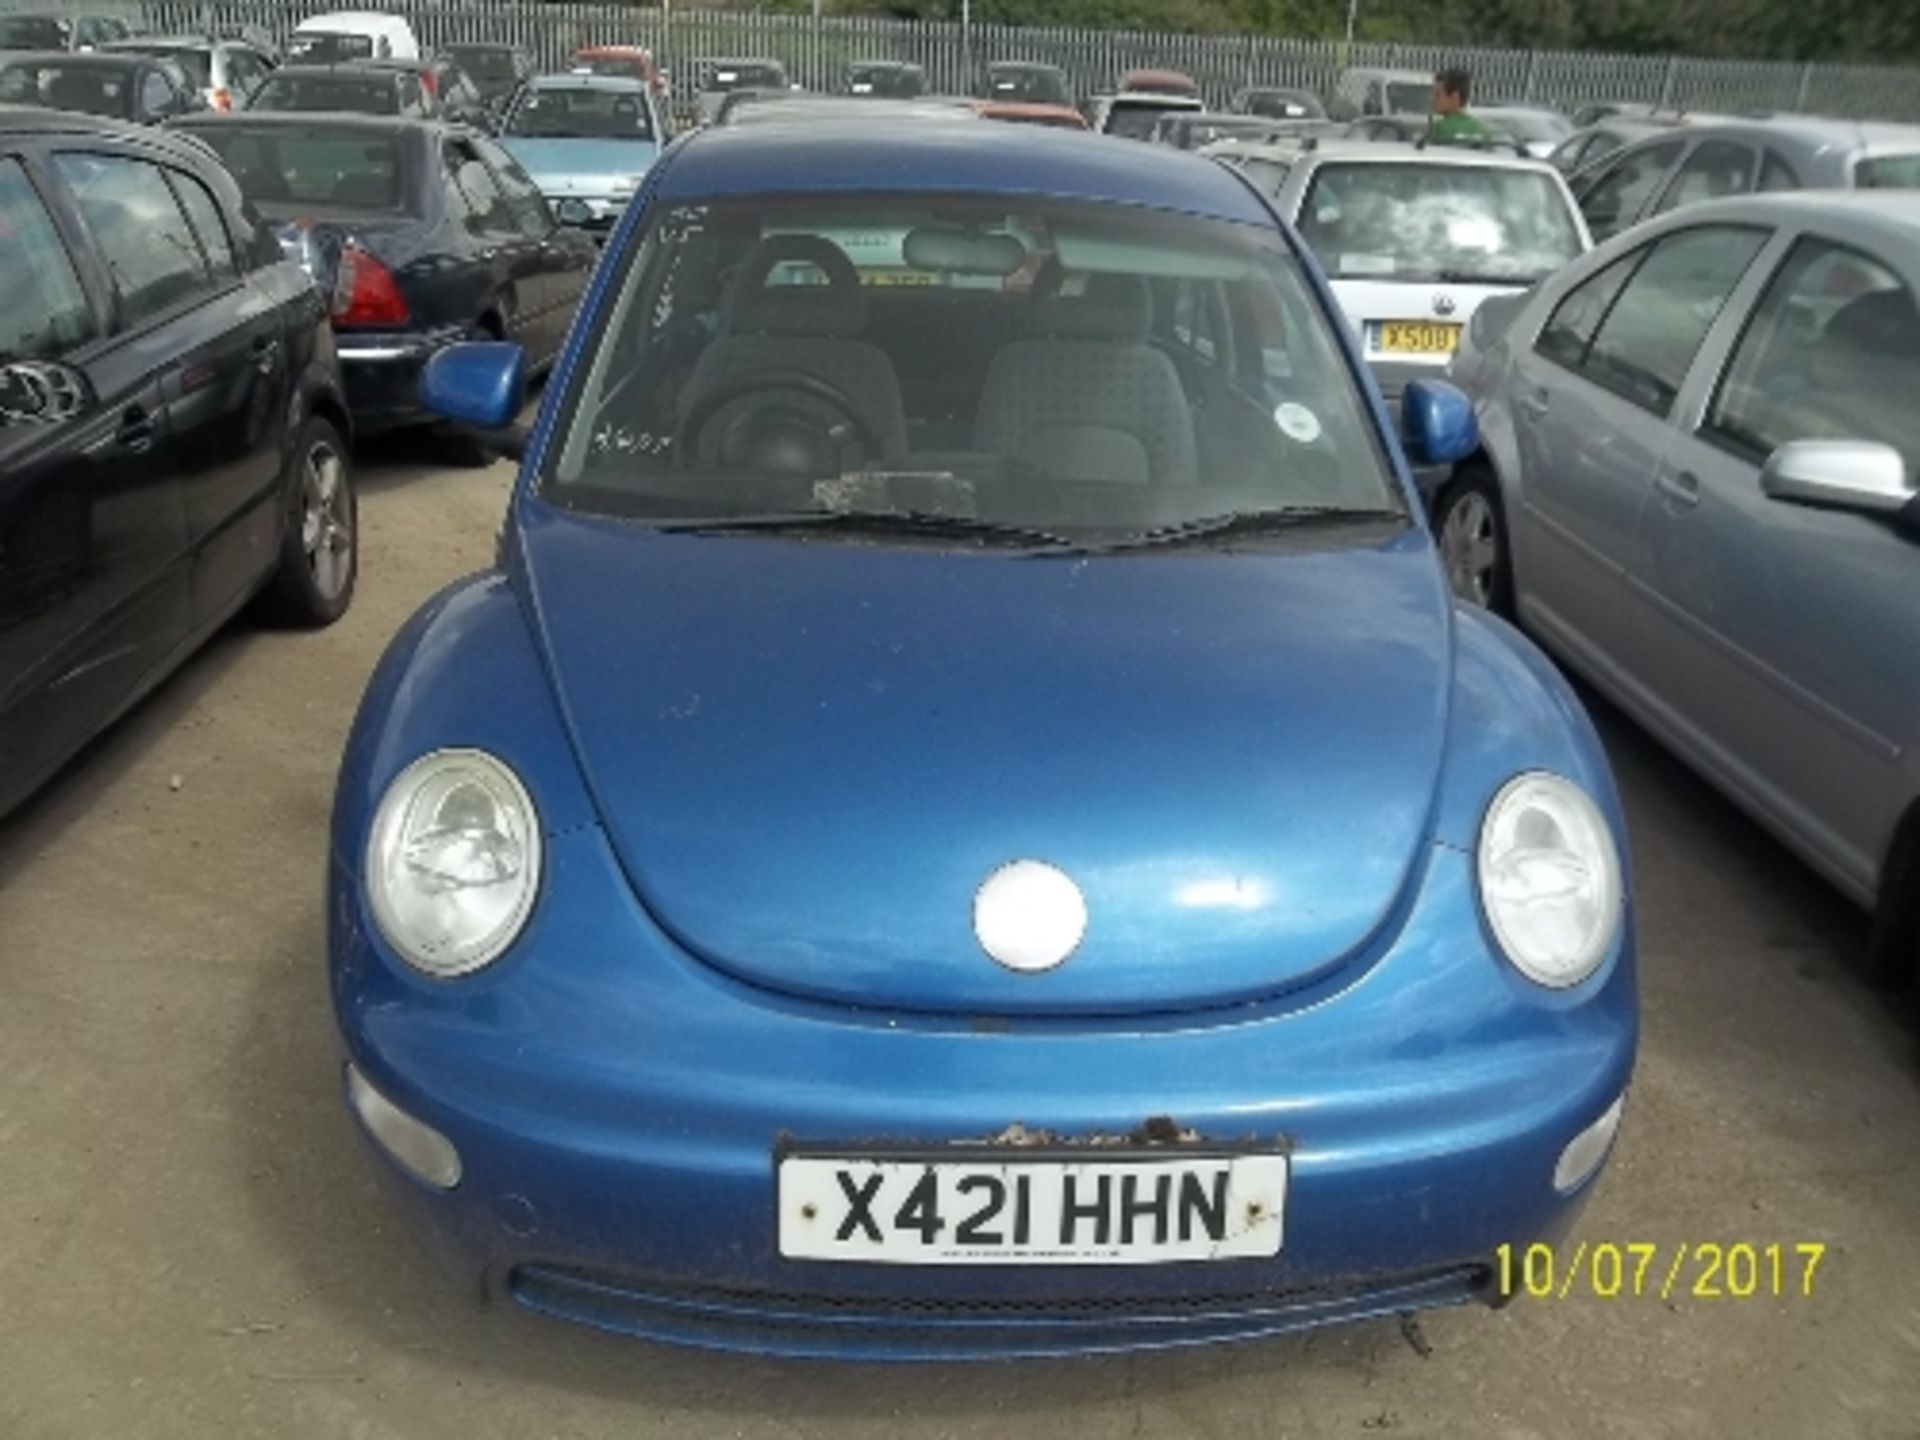 Volkswagen Beetle - X421 HHN Date of registration: 07.11.2000 2000cc, petrol, blue Odometer